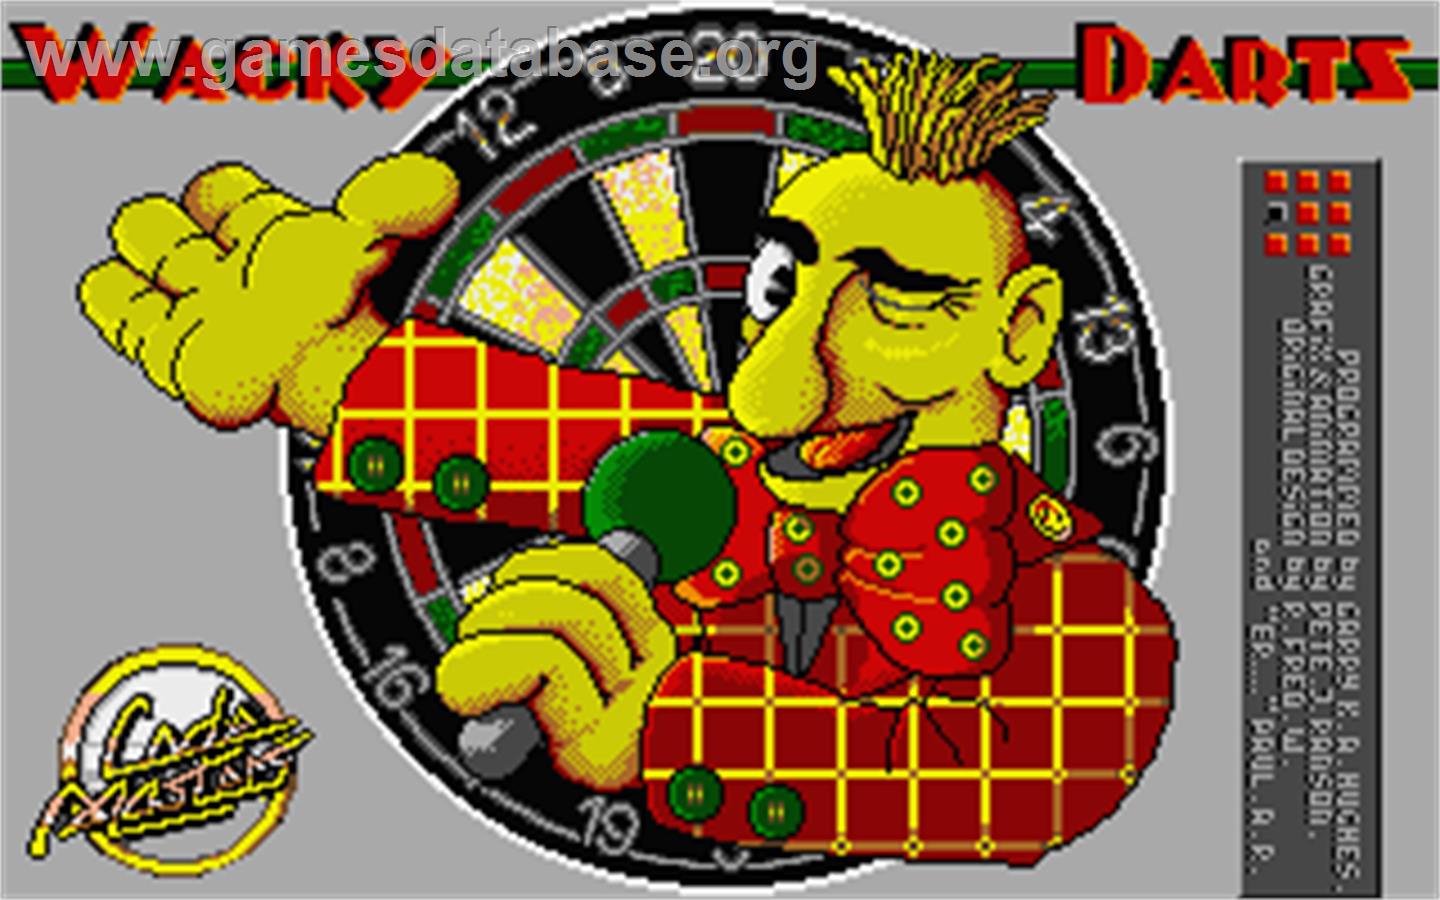 Wacky Darts - Atari ST - Artwork - Title Screen